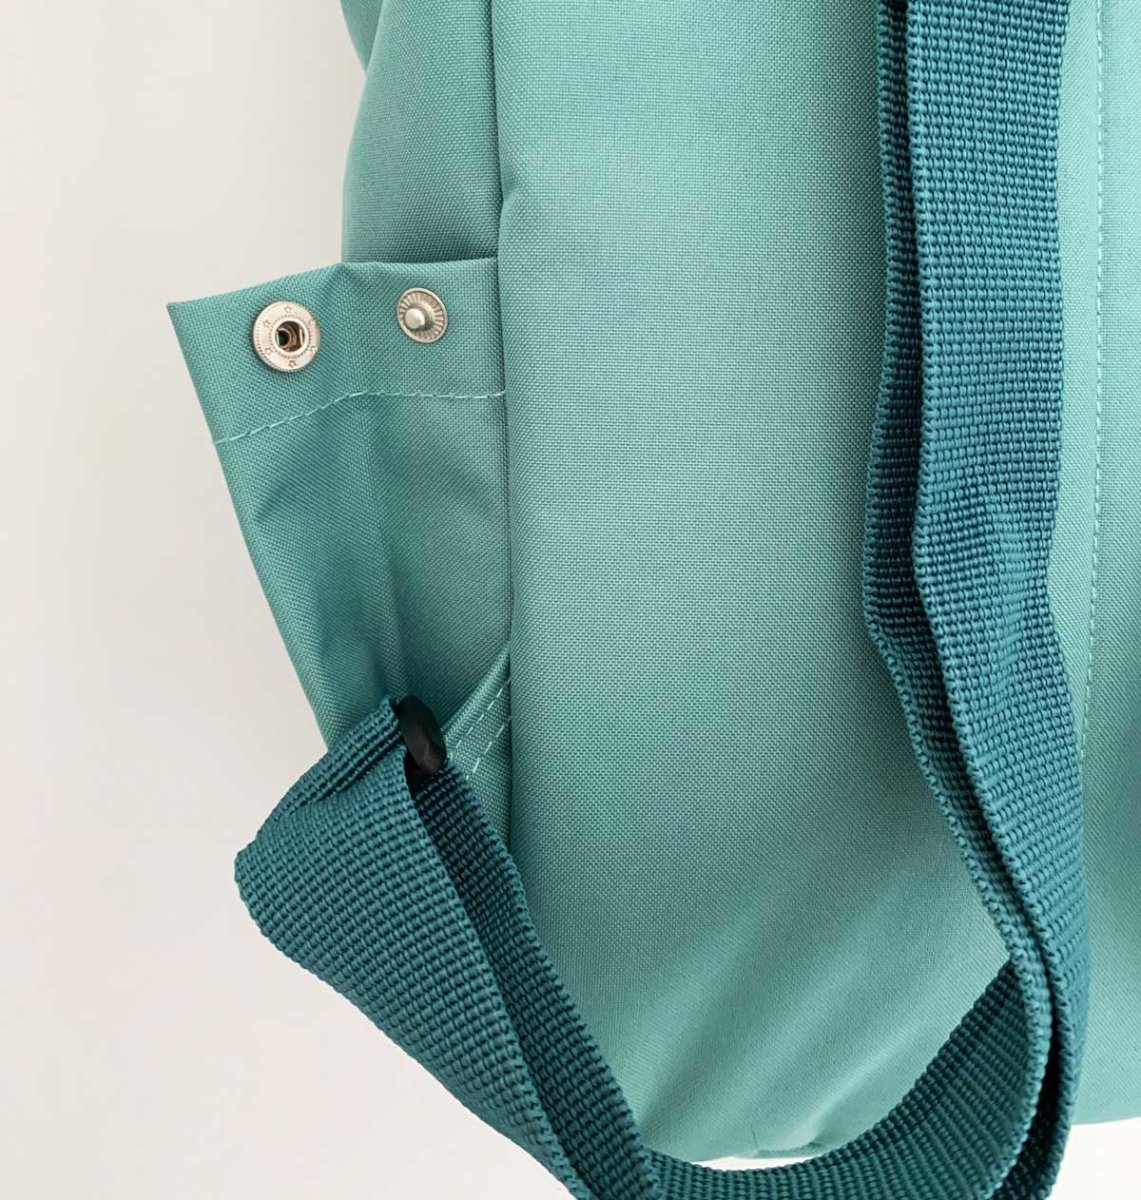 Orca Whale Mini Roll-top Recycled Backpack - Blue Panda